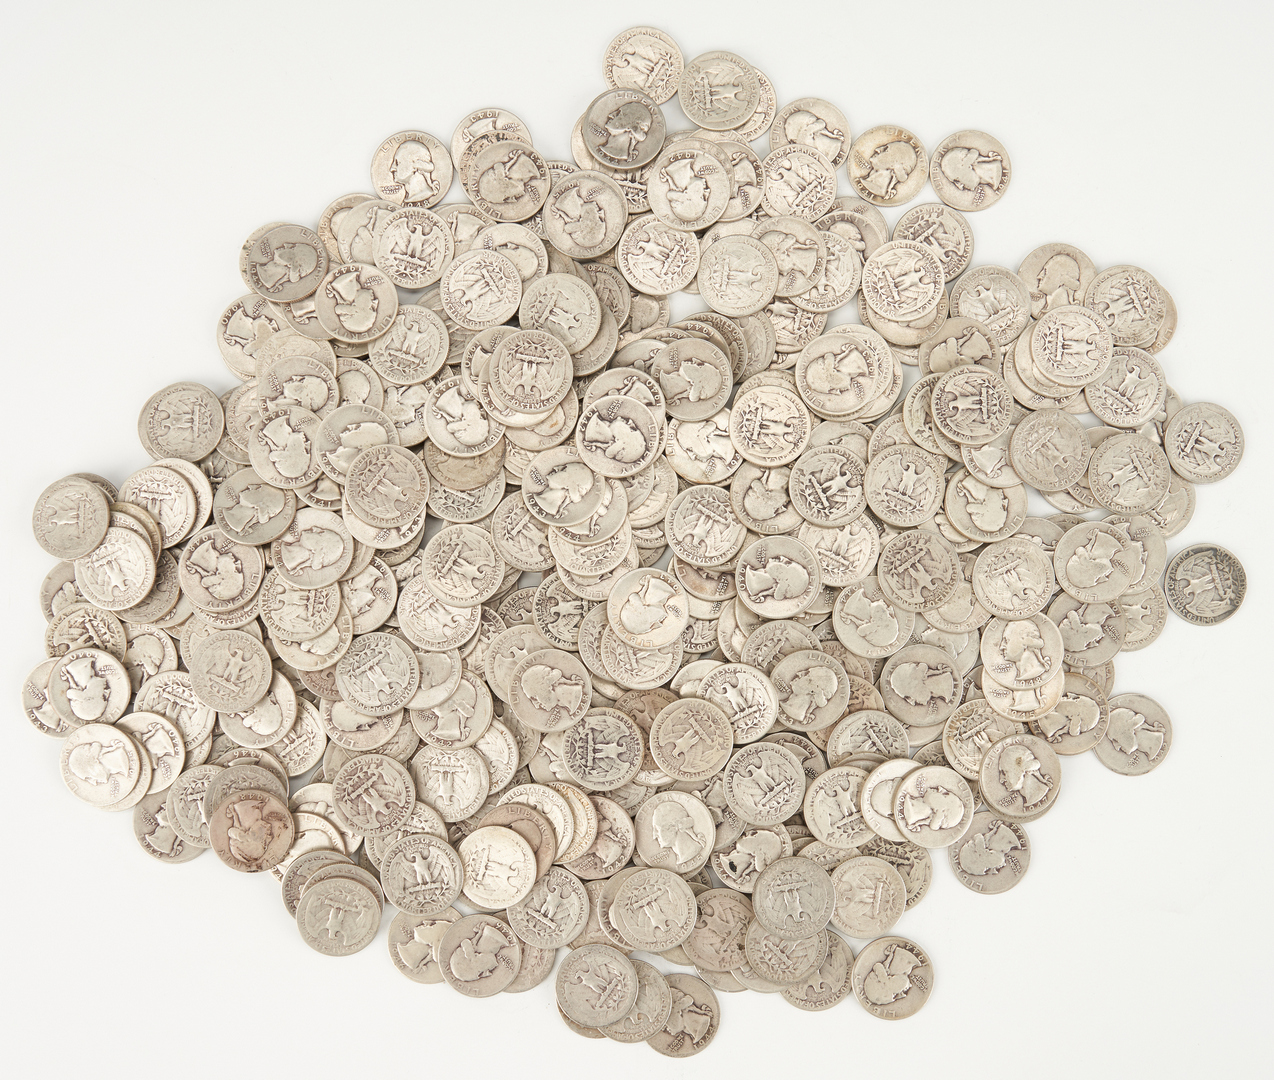 Lot 736: 406 90% Washington Silver Quarters, 1941-49